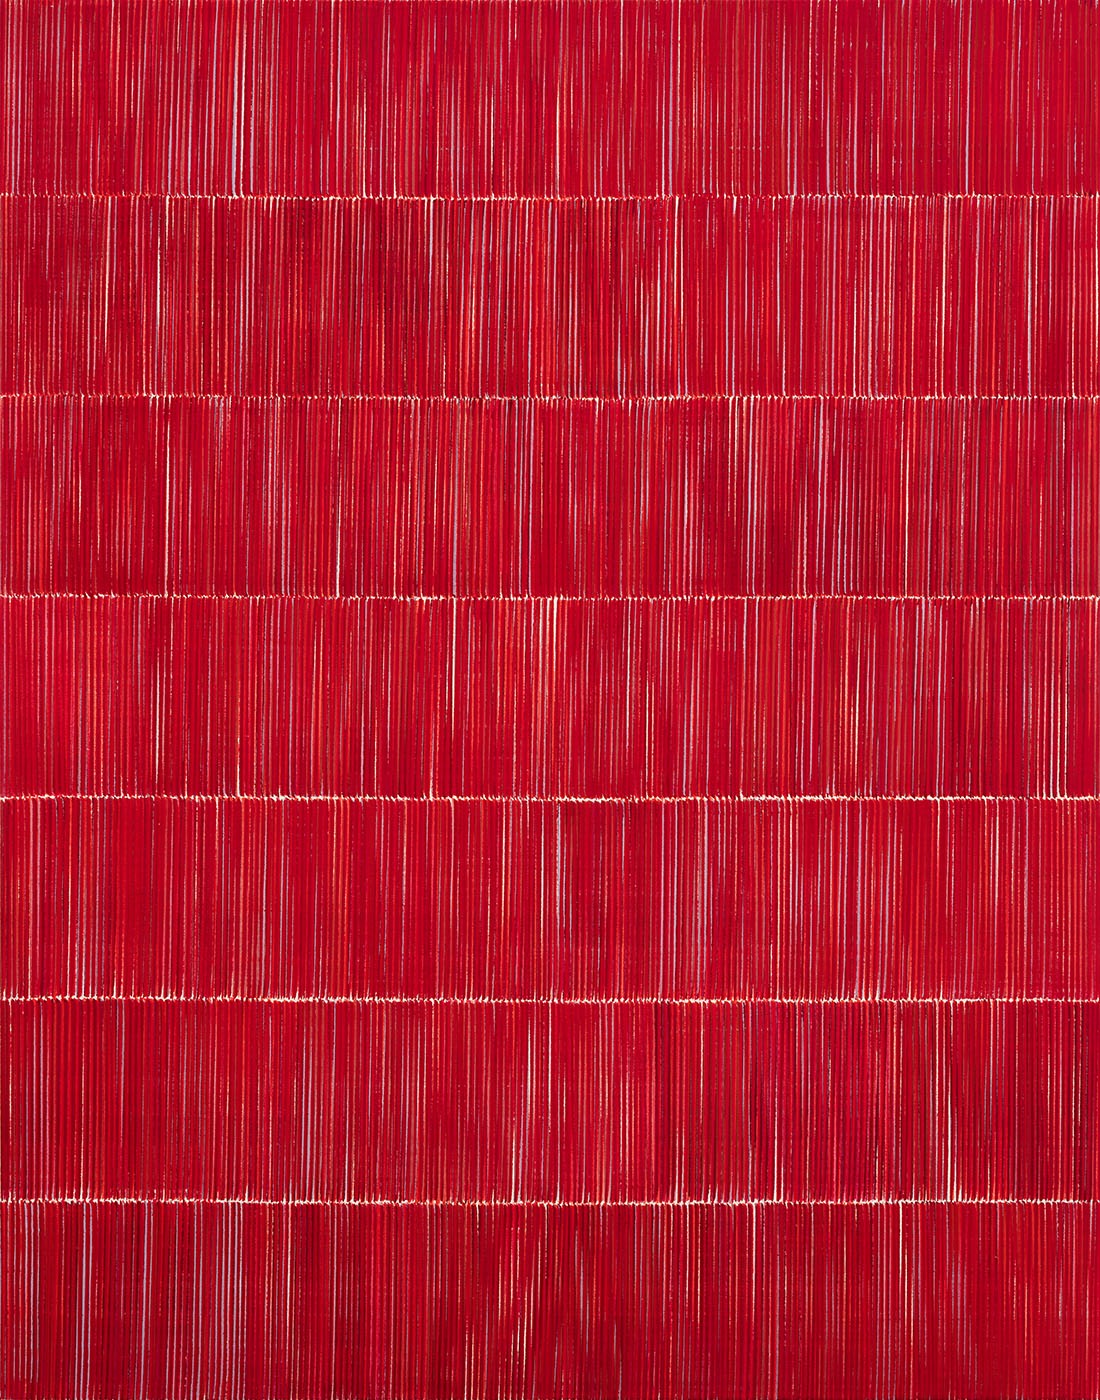 Nikola Dimitrov, KlangRaum IX, 2021, Pigmente, Bindemittel auf Leinwand, 140 × 110 cm